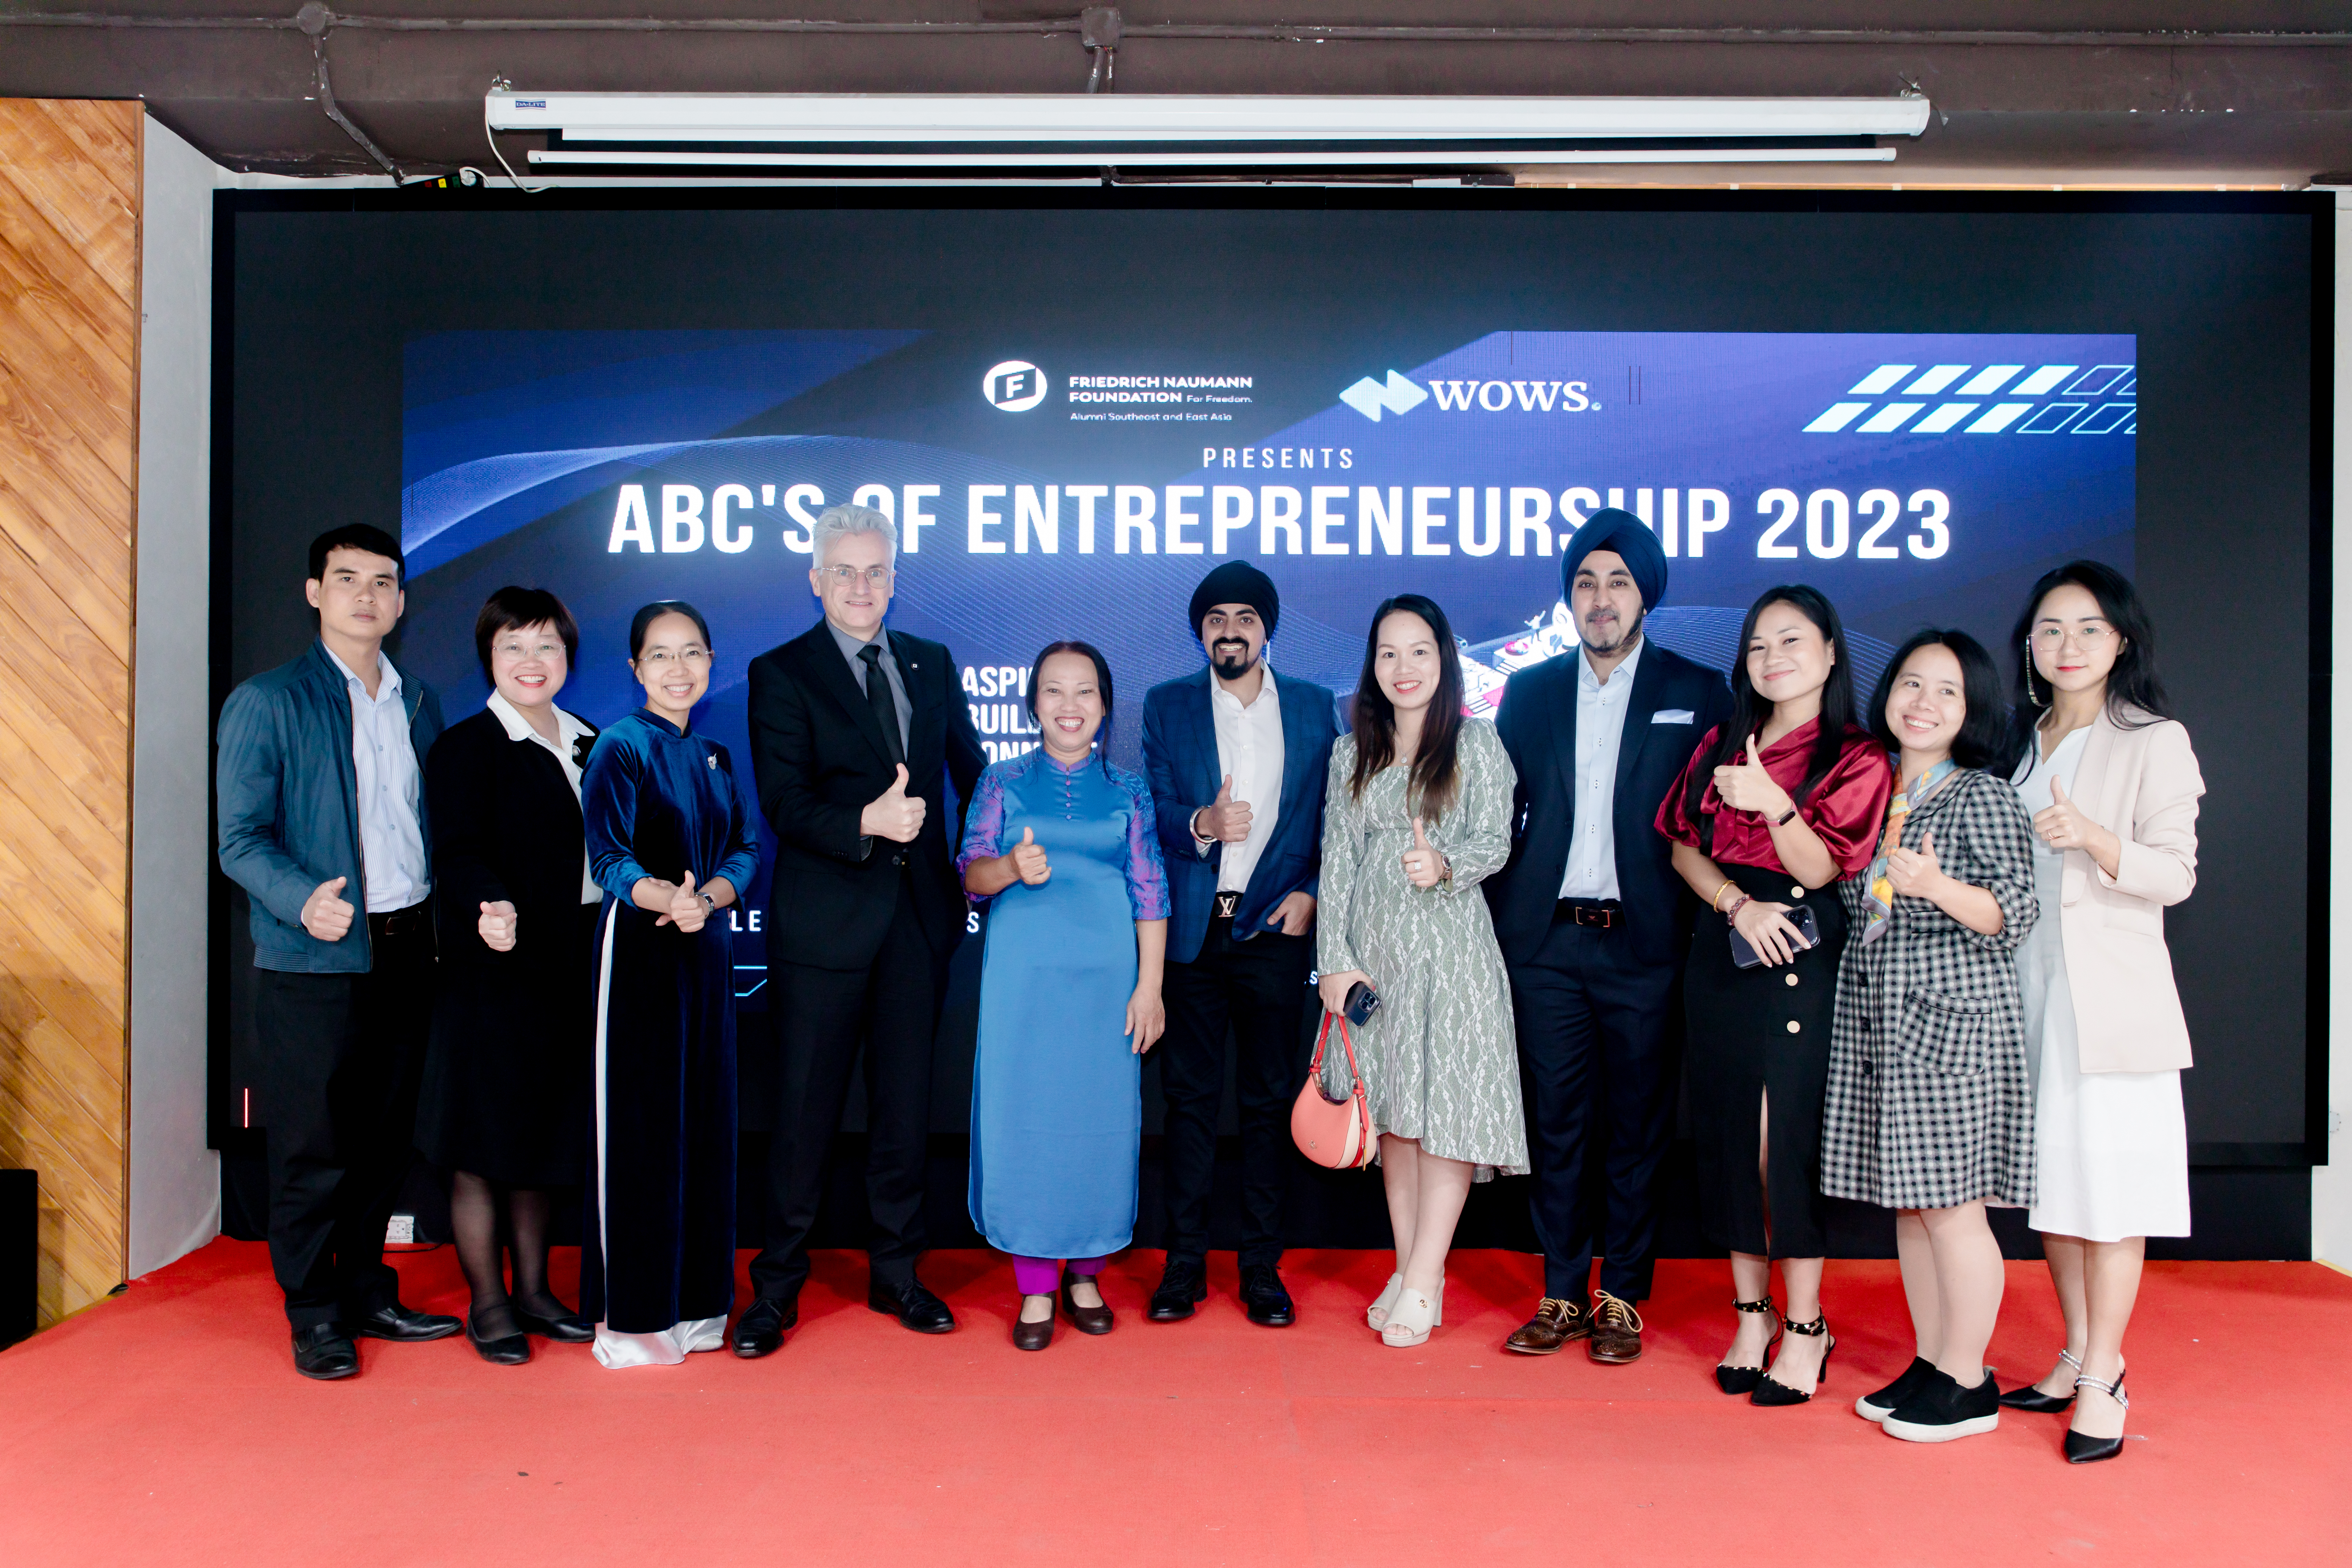 ABCs of Entrepreneurship